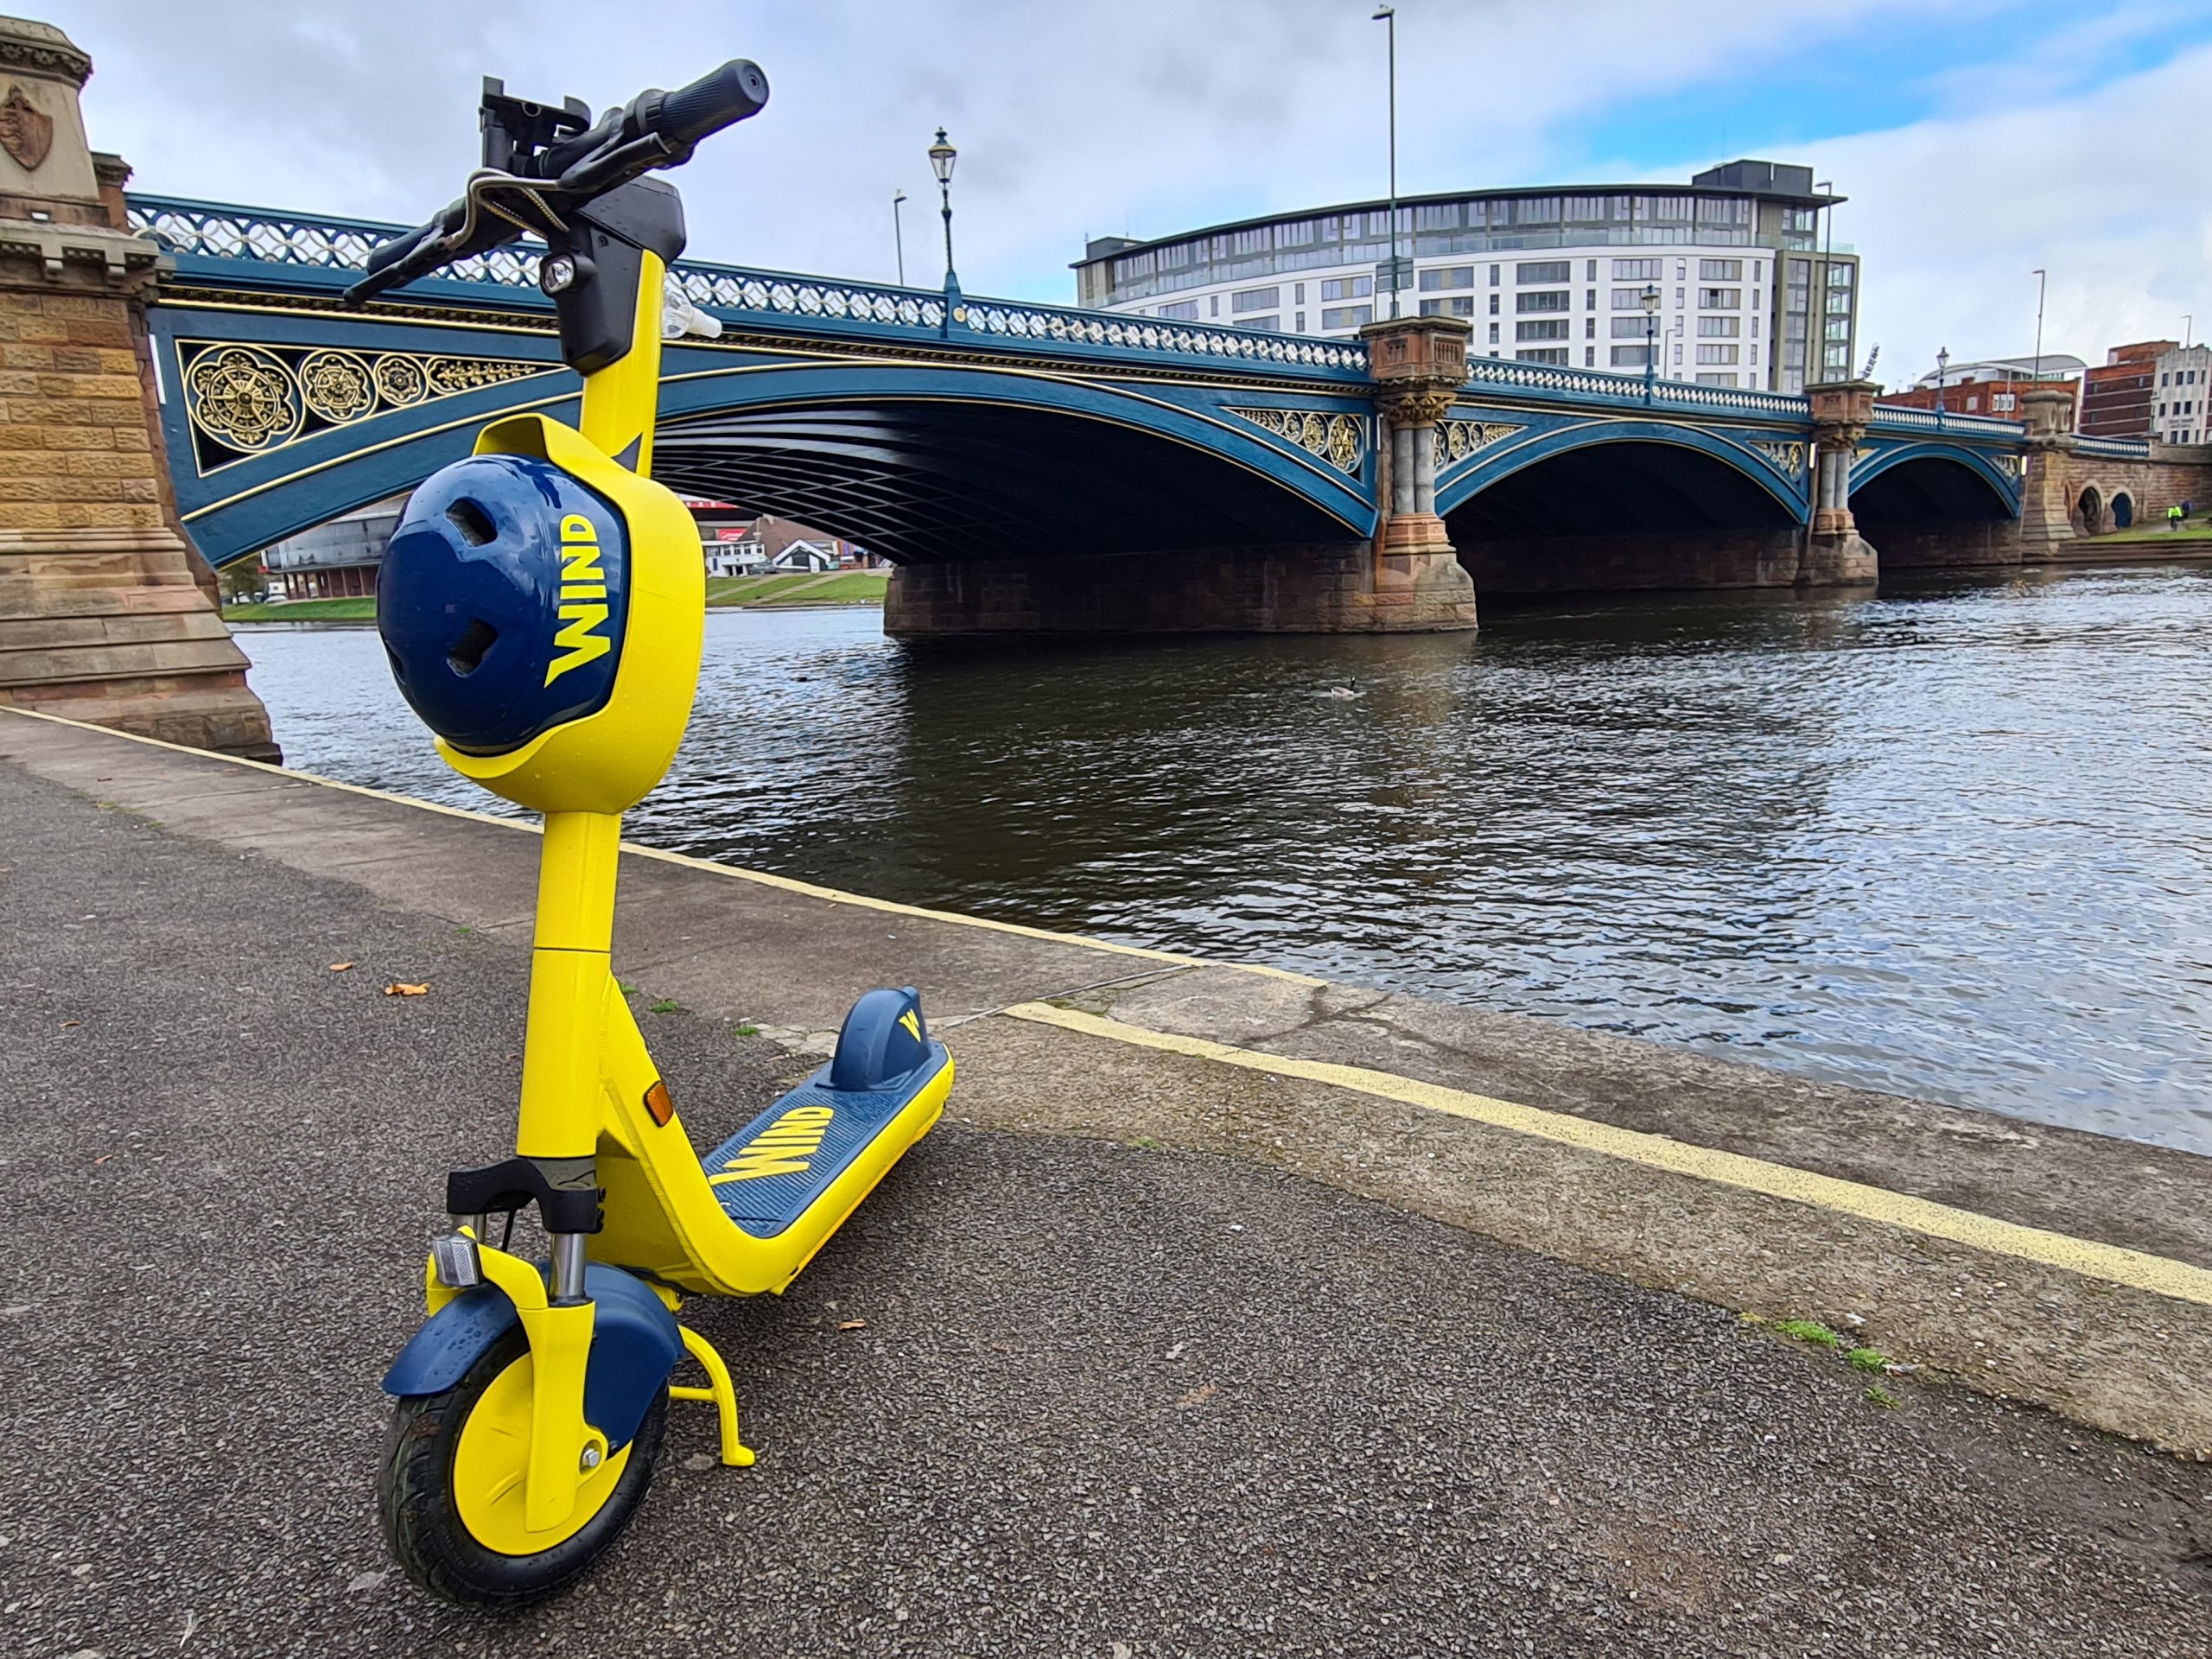 E-scooter at Trent Bridge